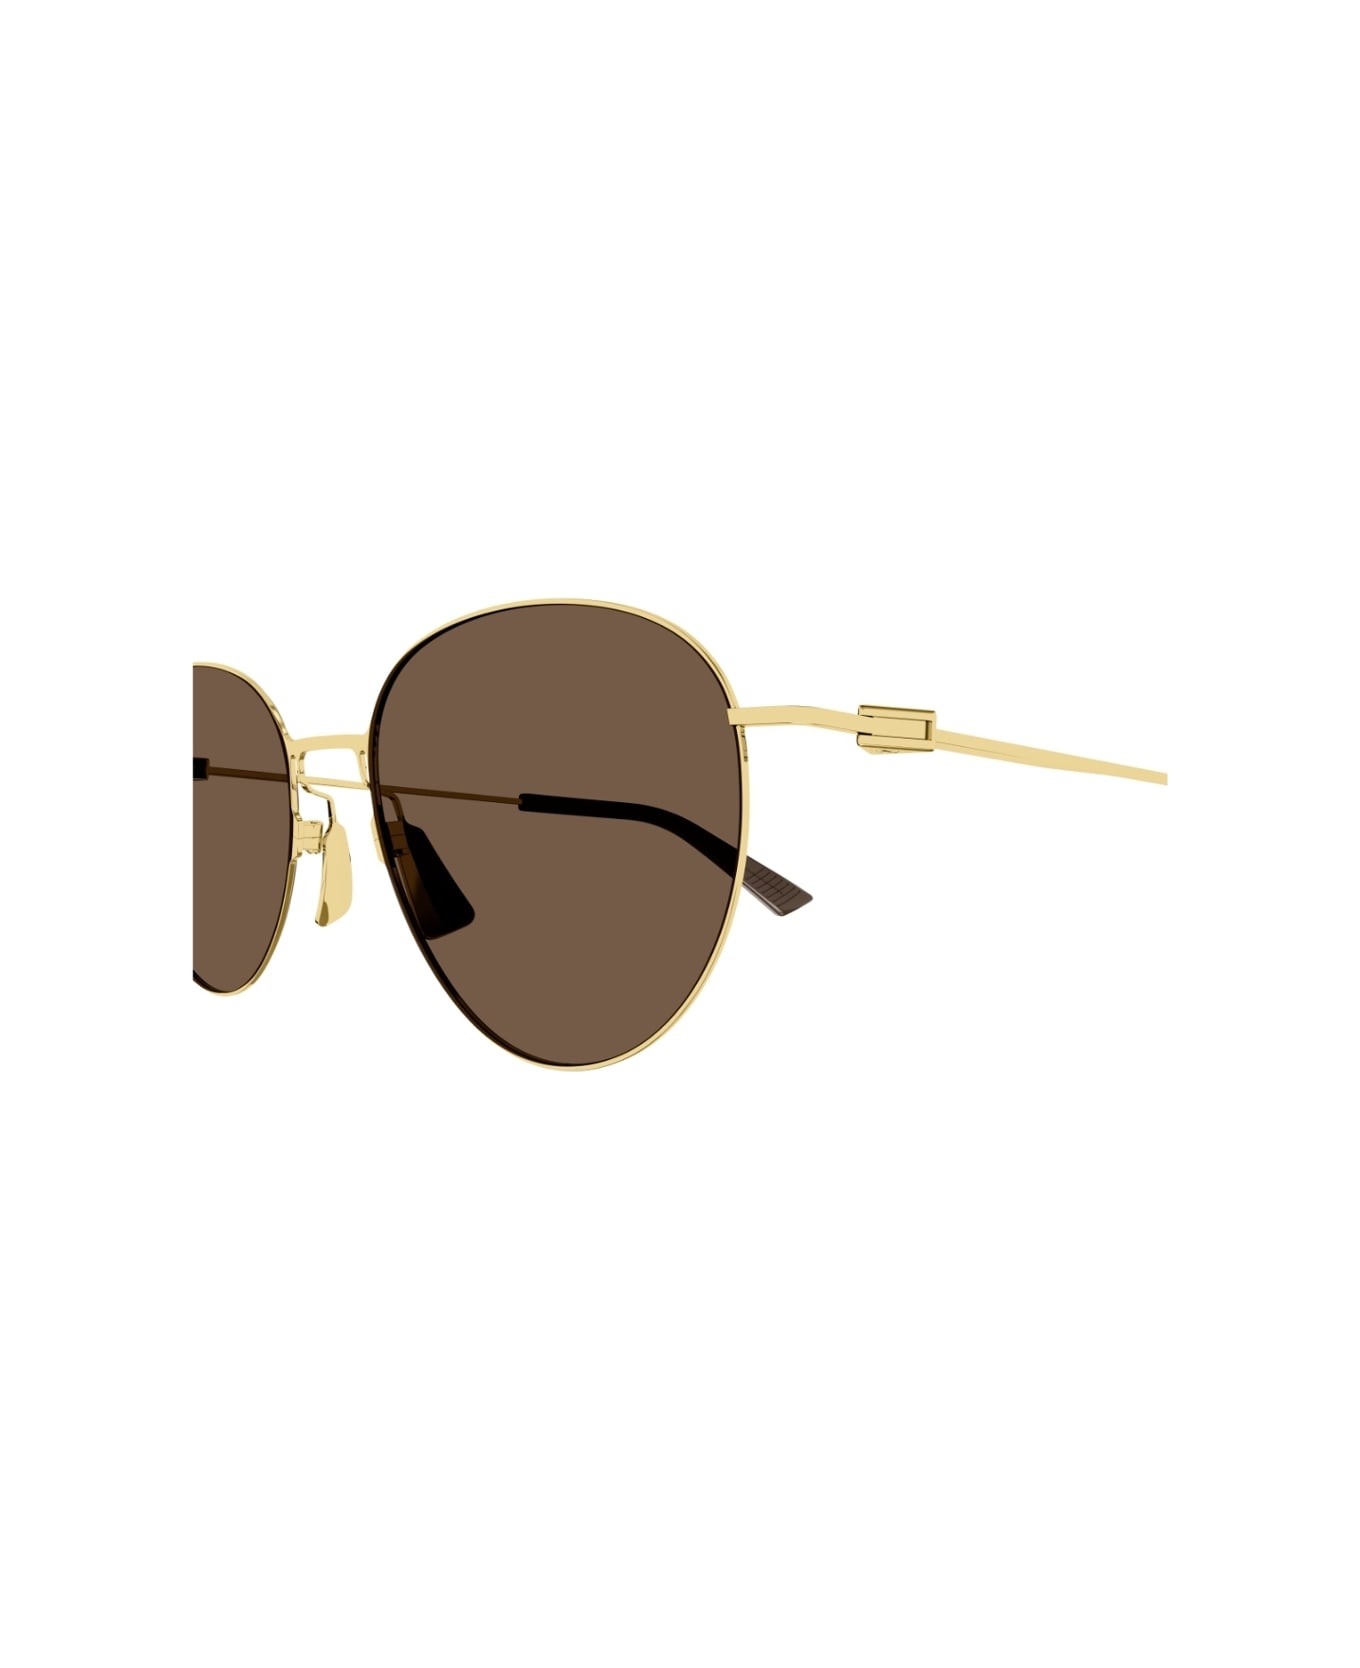 Bottega Veneta Eyewear BV1268s 002 Sunglasses サングラス